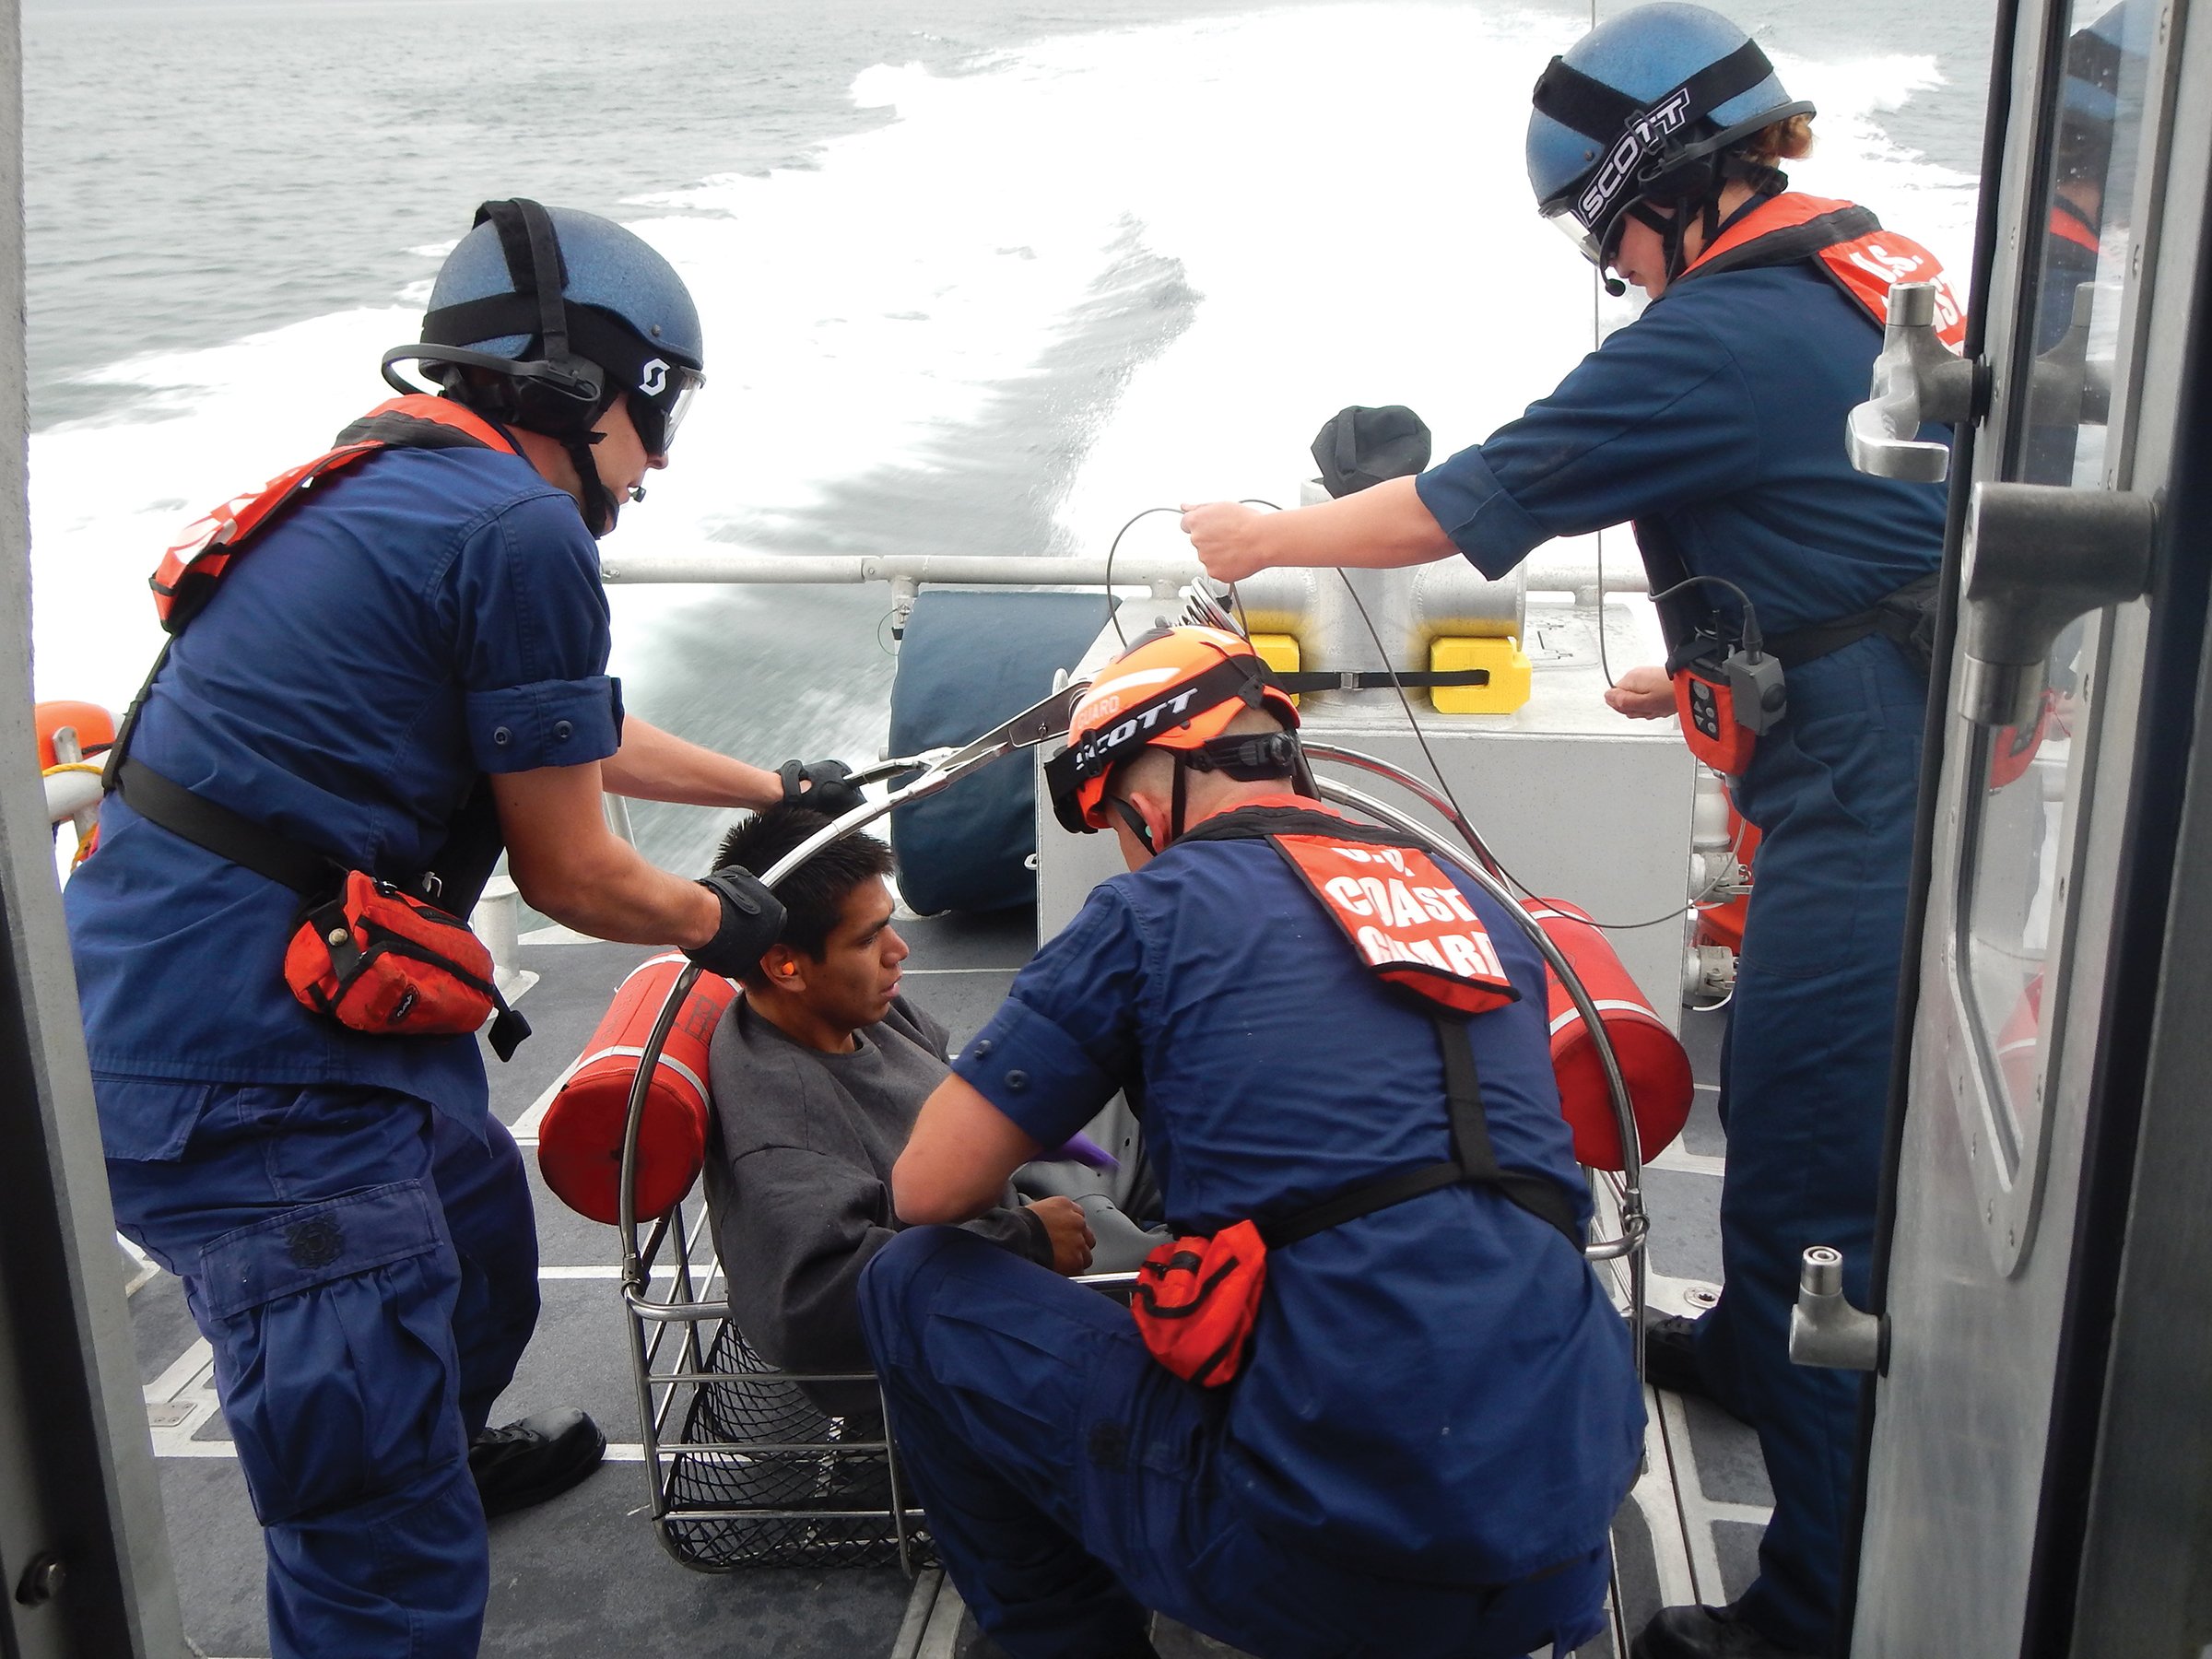 Coast Guard Boat Requirements: Safety Criteria